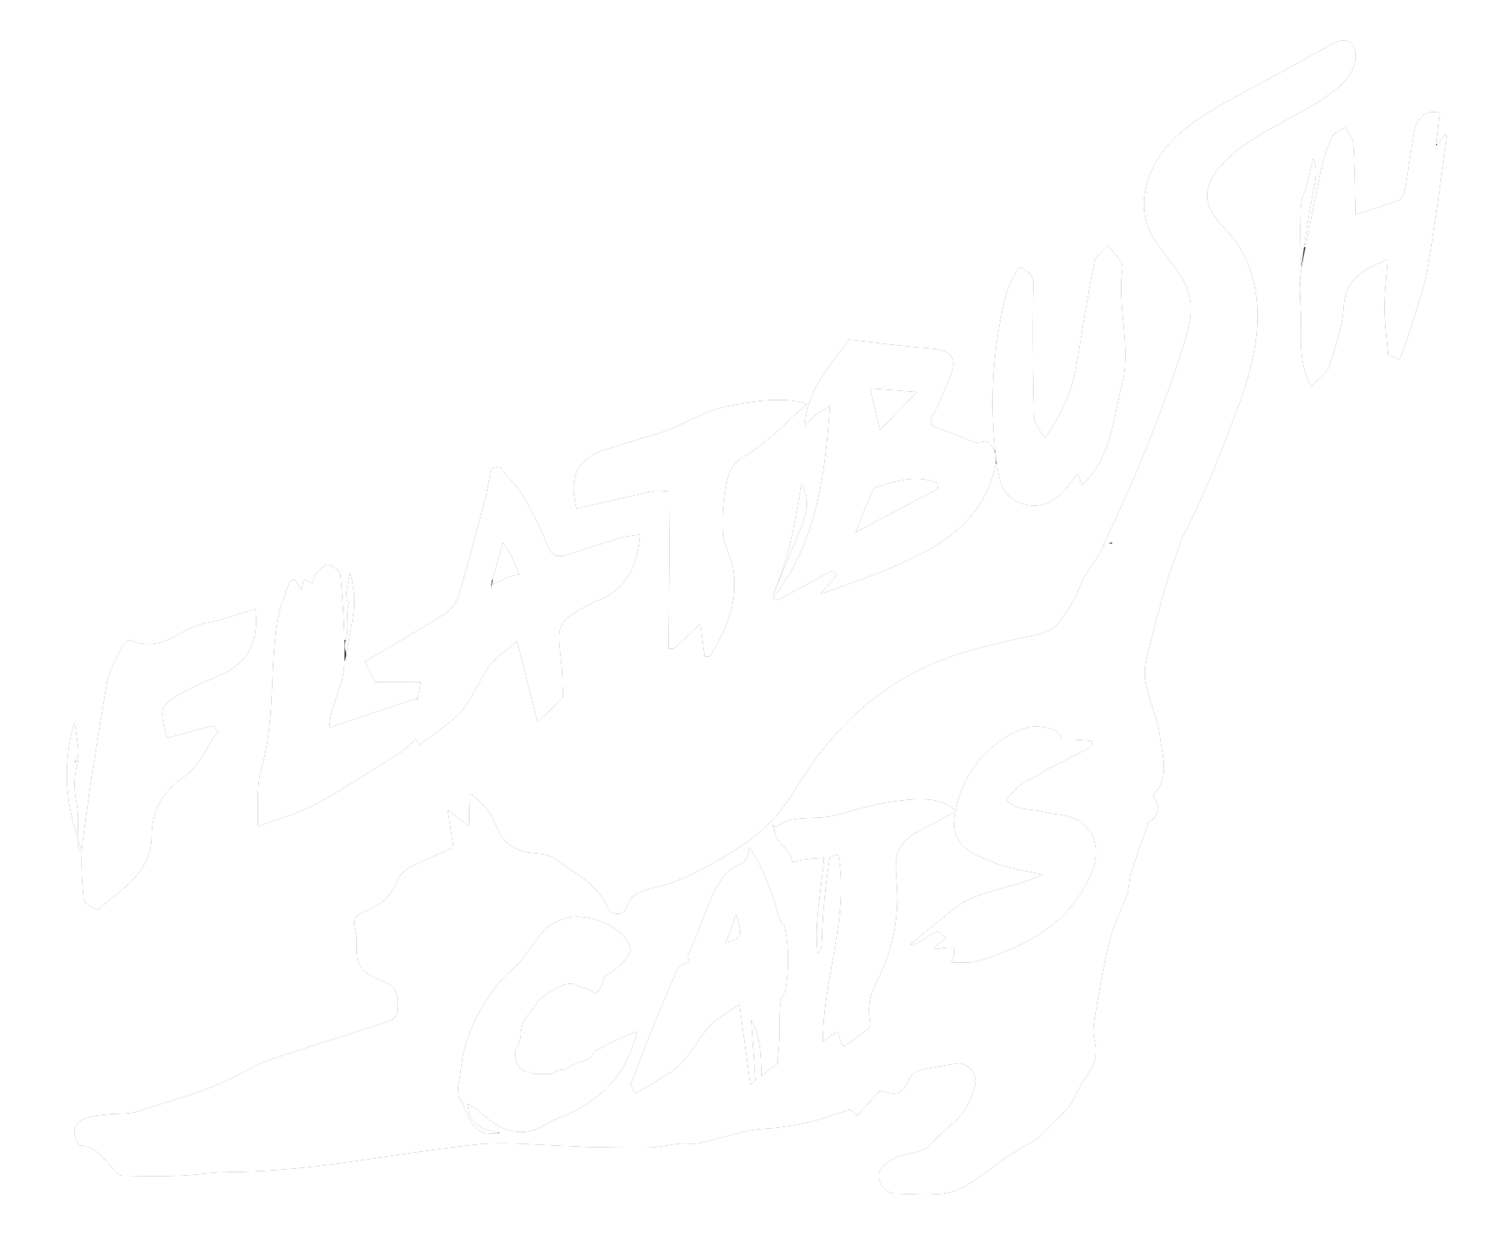 Flatbush Cats